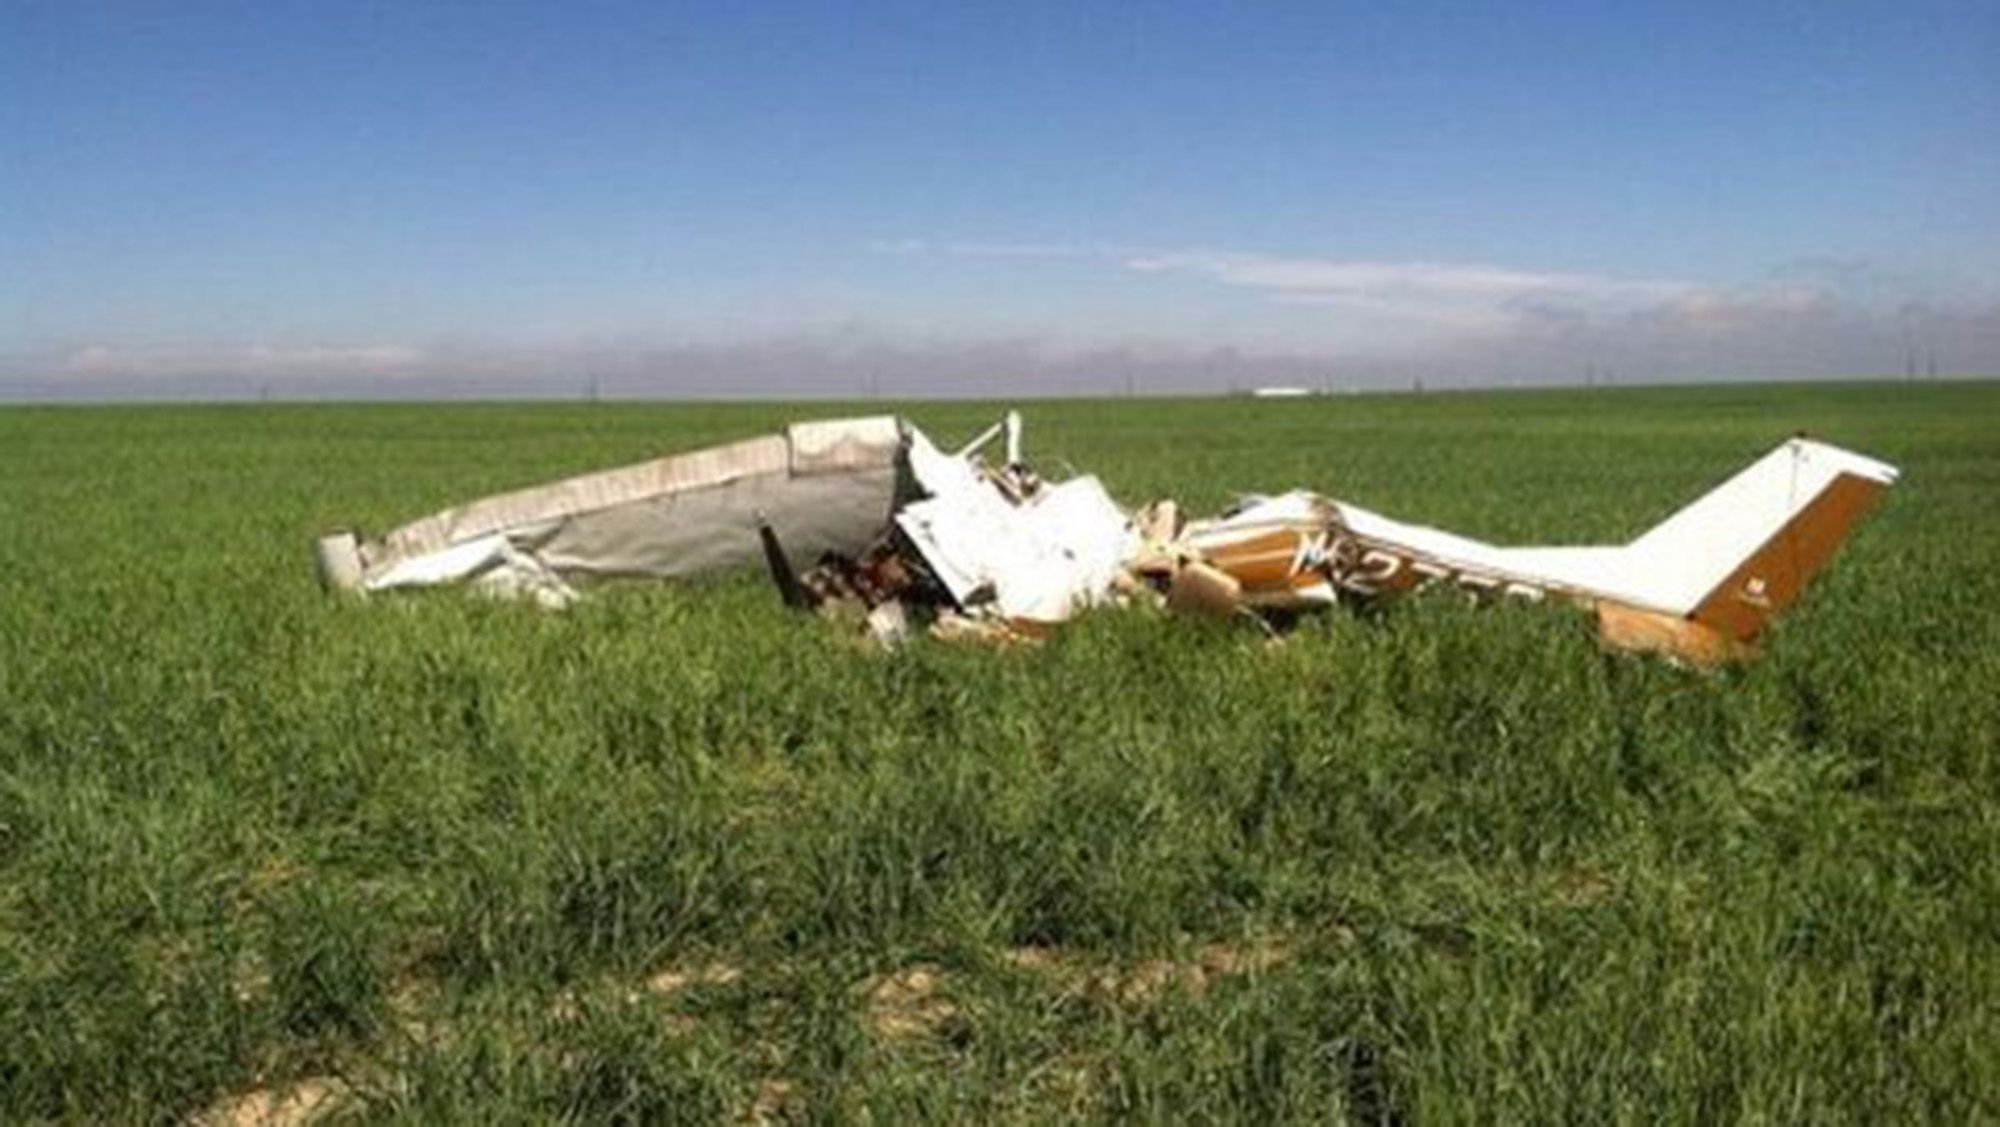 NTSB: Taking selfies likely caused fatal Colorado plane crash | CNN